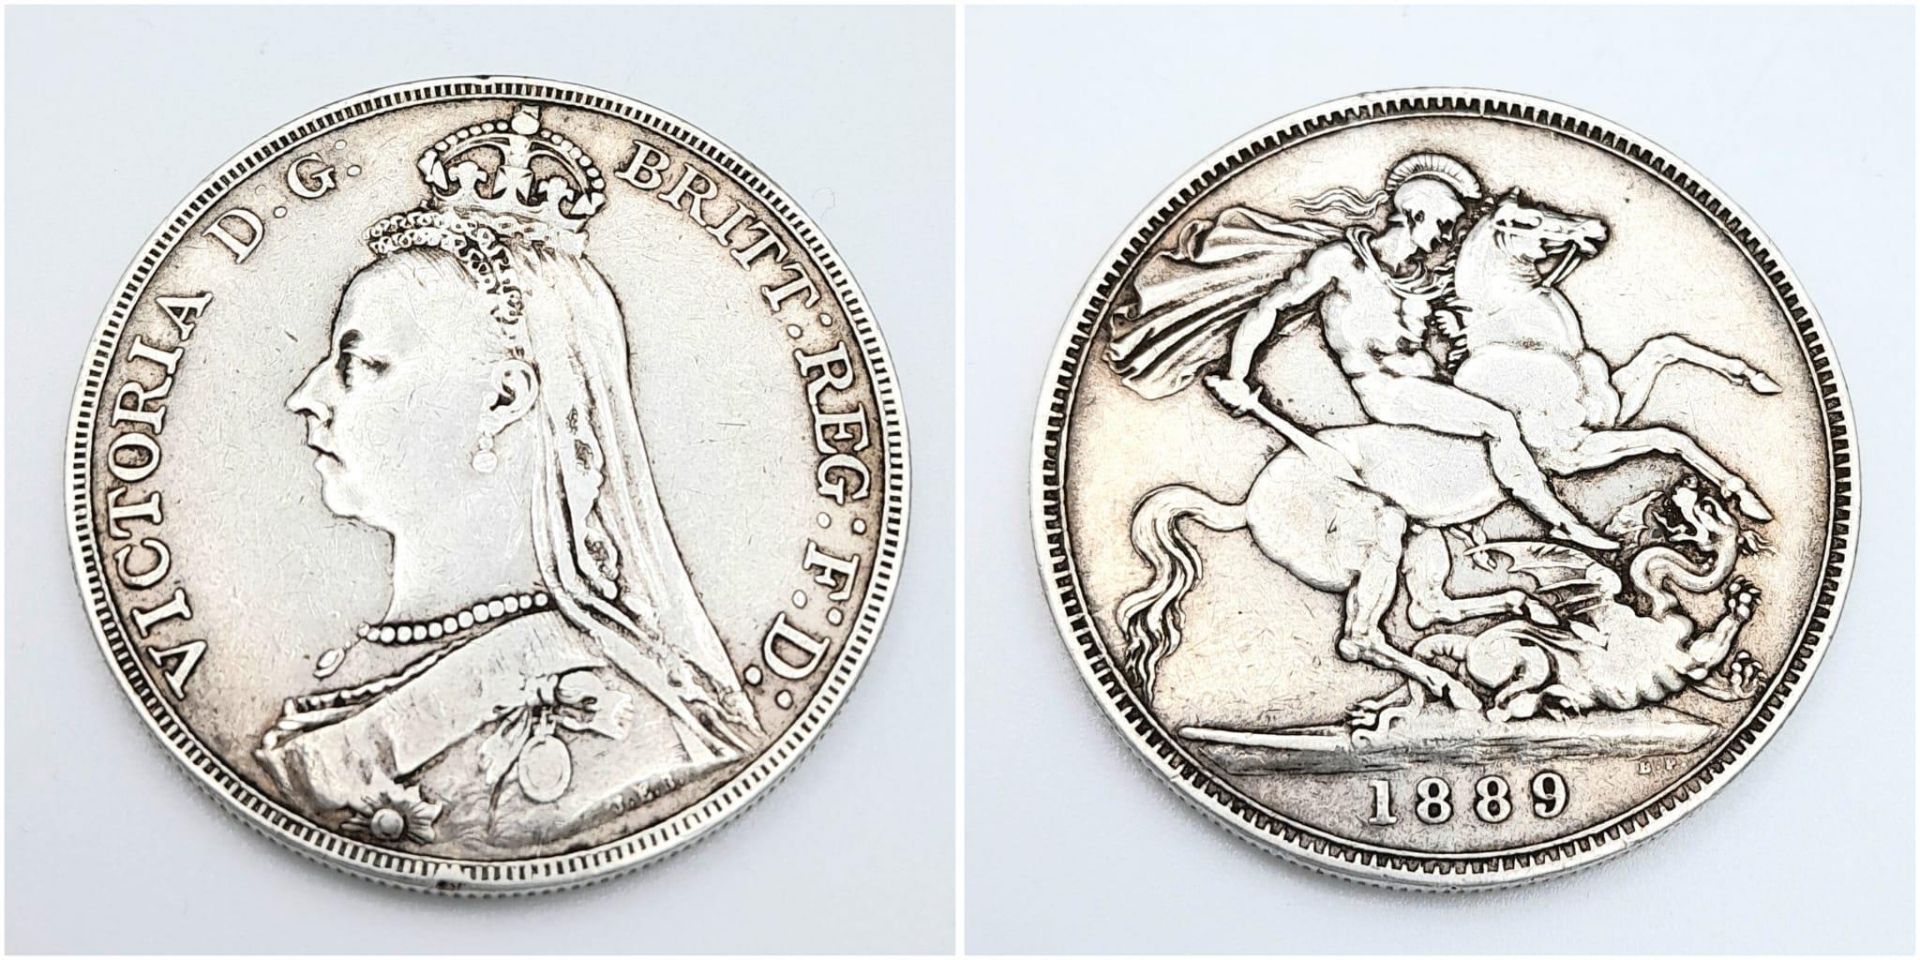 An 1889 Queen Victoria Silver Crown Coin. VF+ grade but please see photos for conditions.